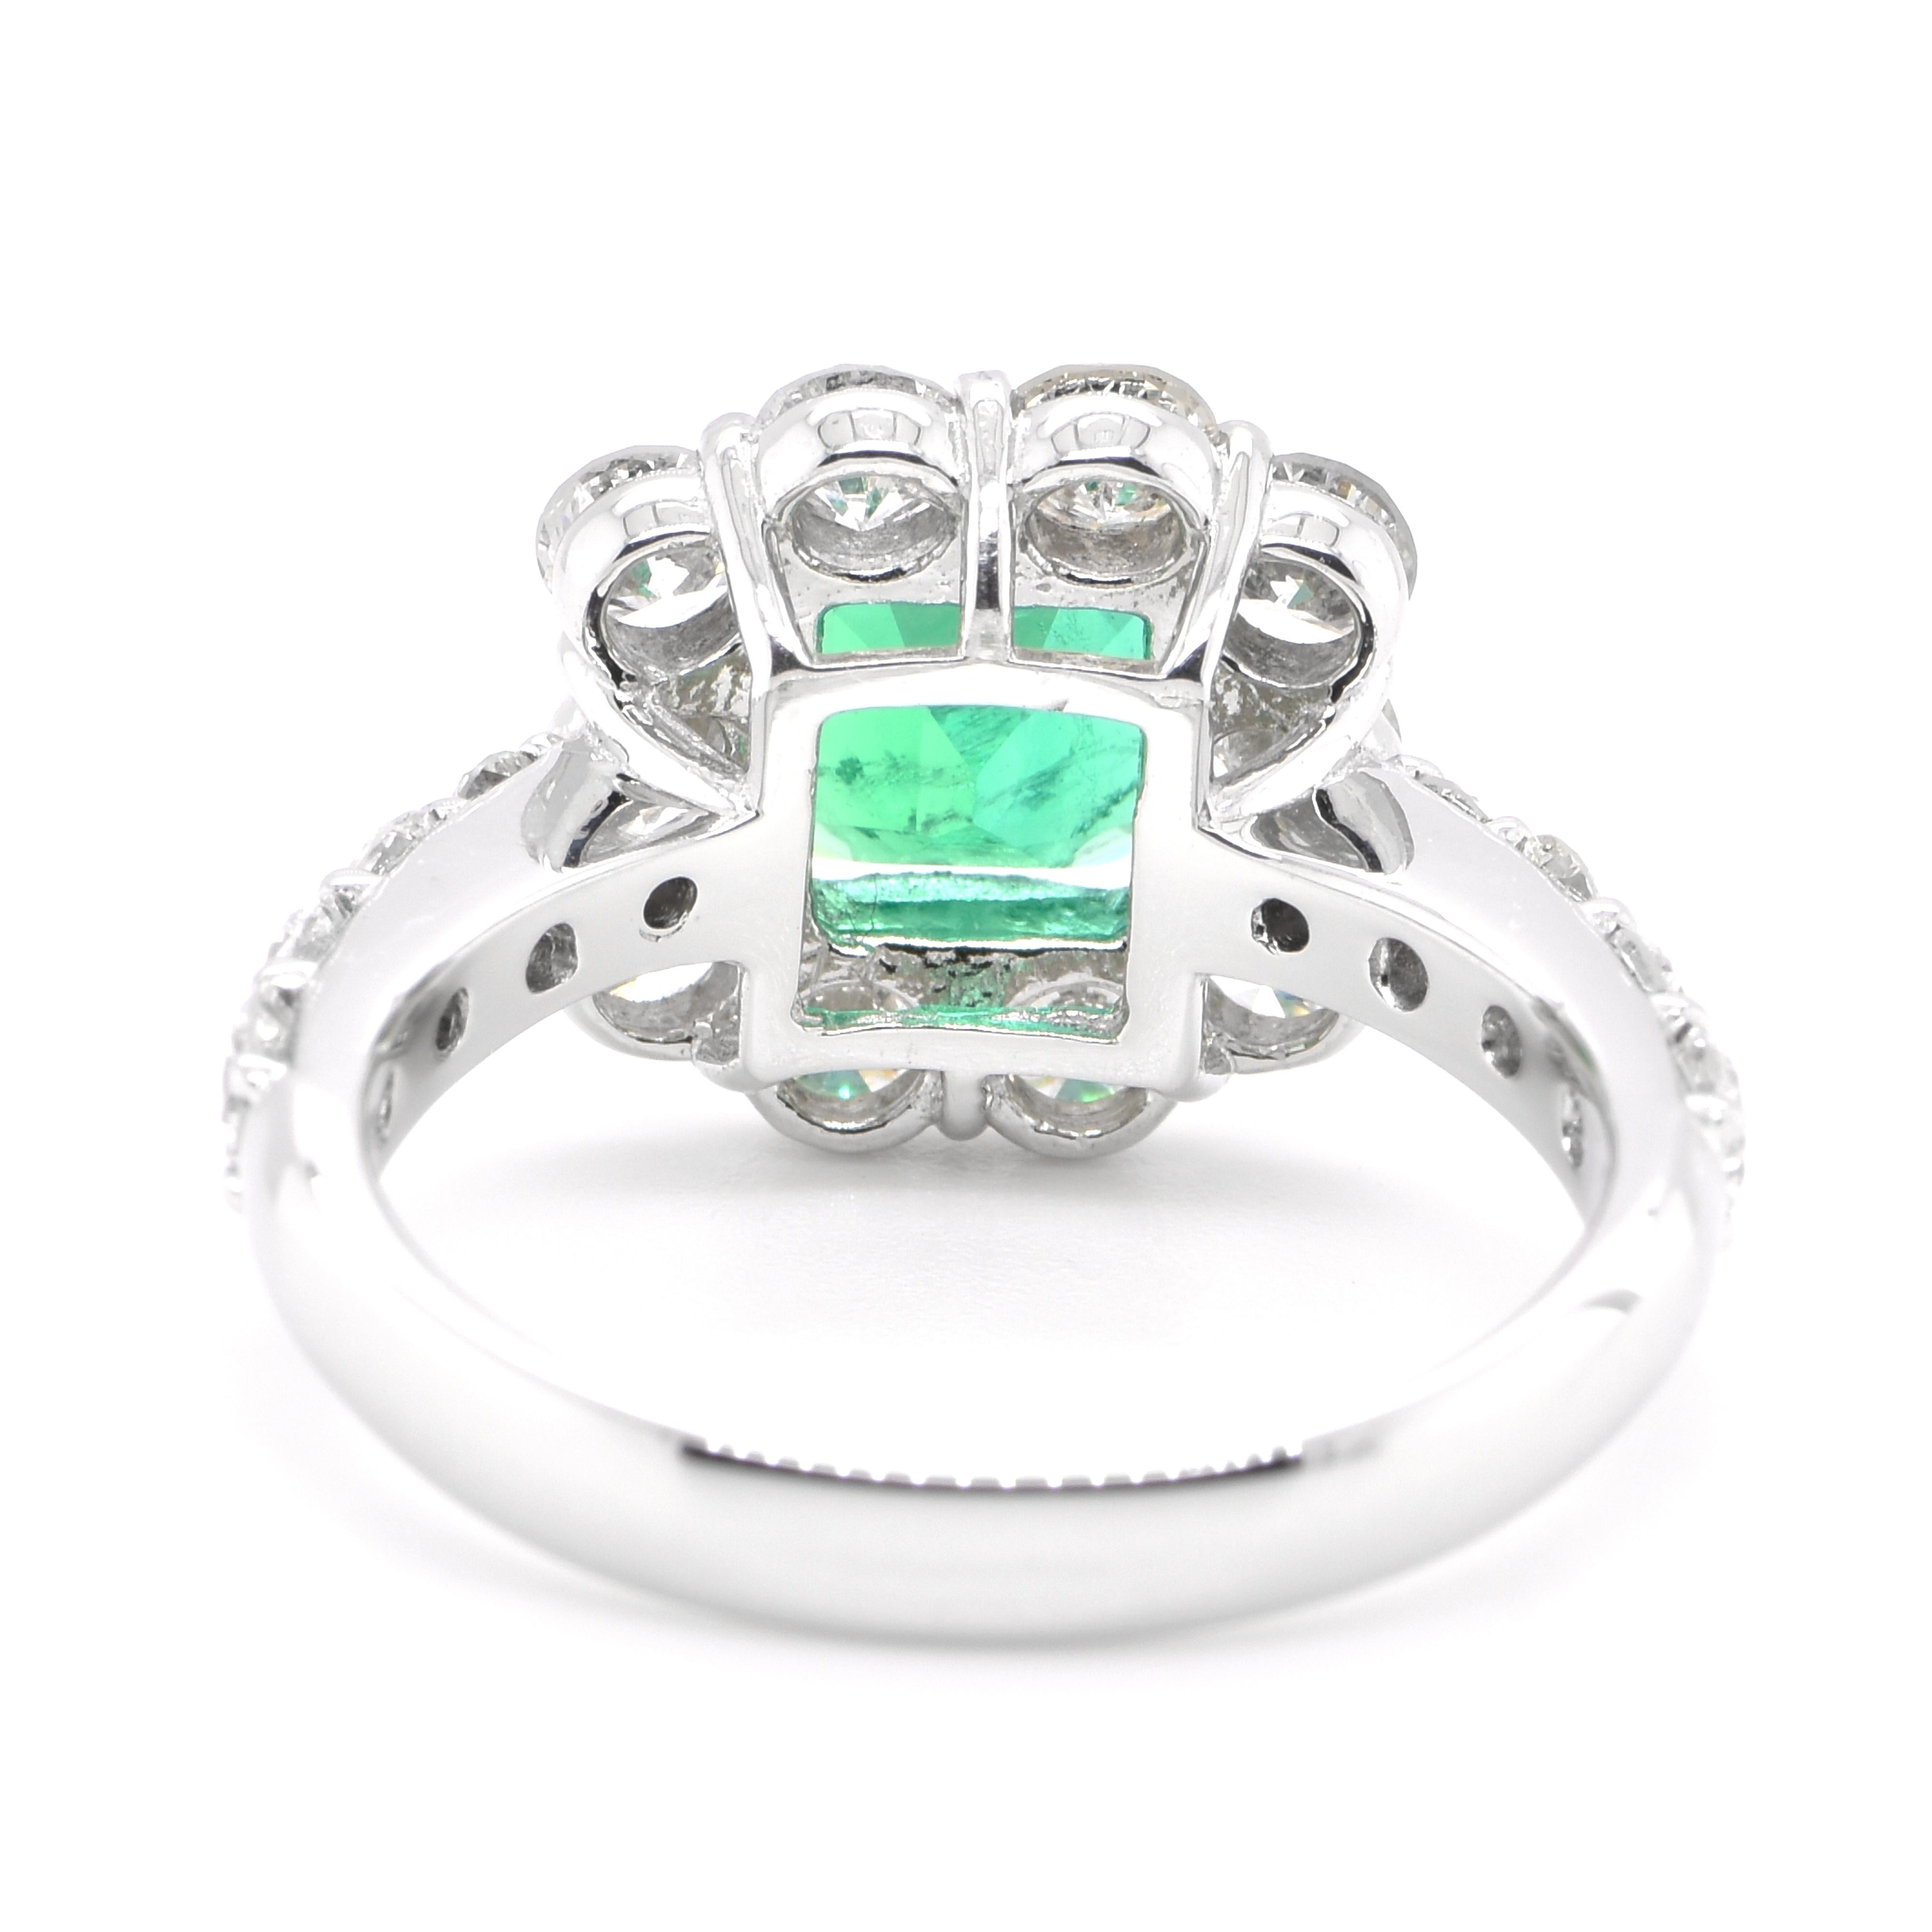 Emerald Cut GRS Certified 1.43 Carat Natural Colombian Emerald Ring Set in Platinum